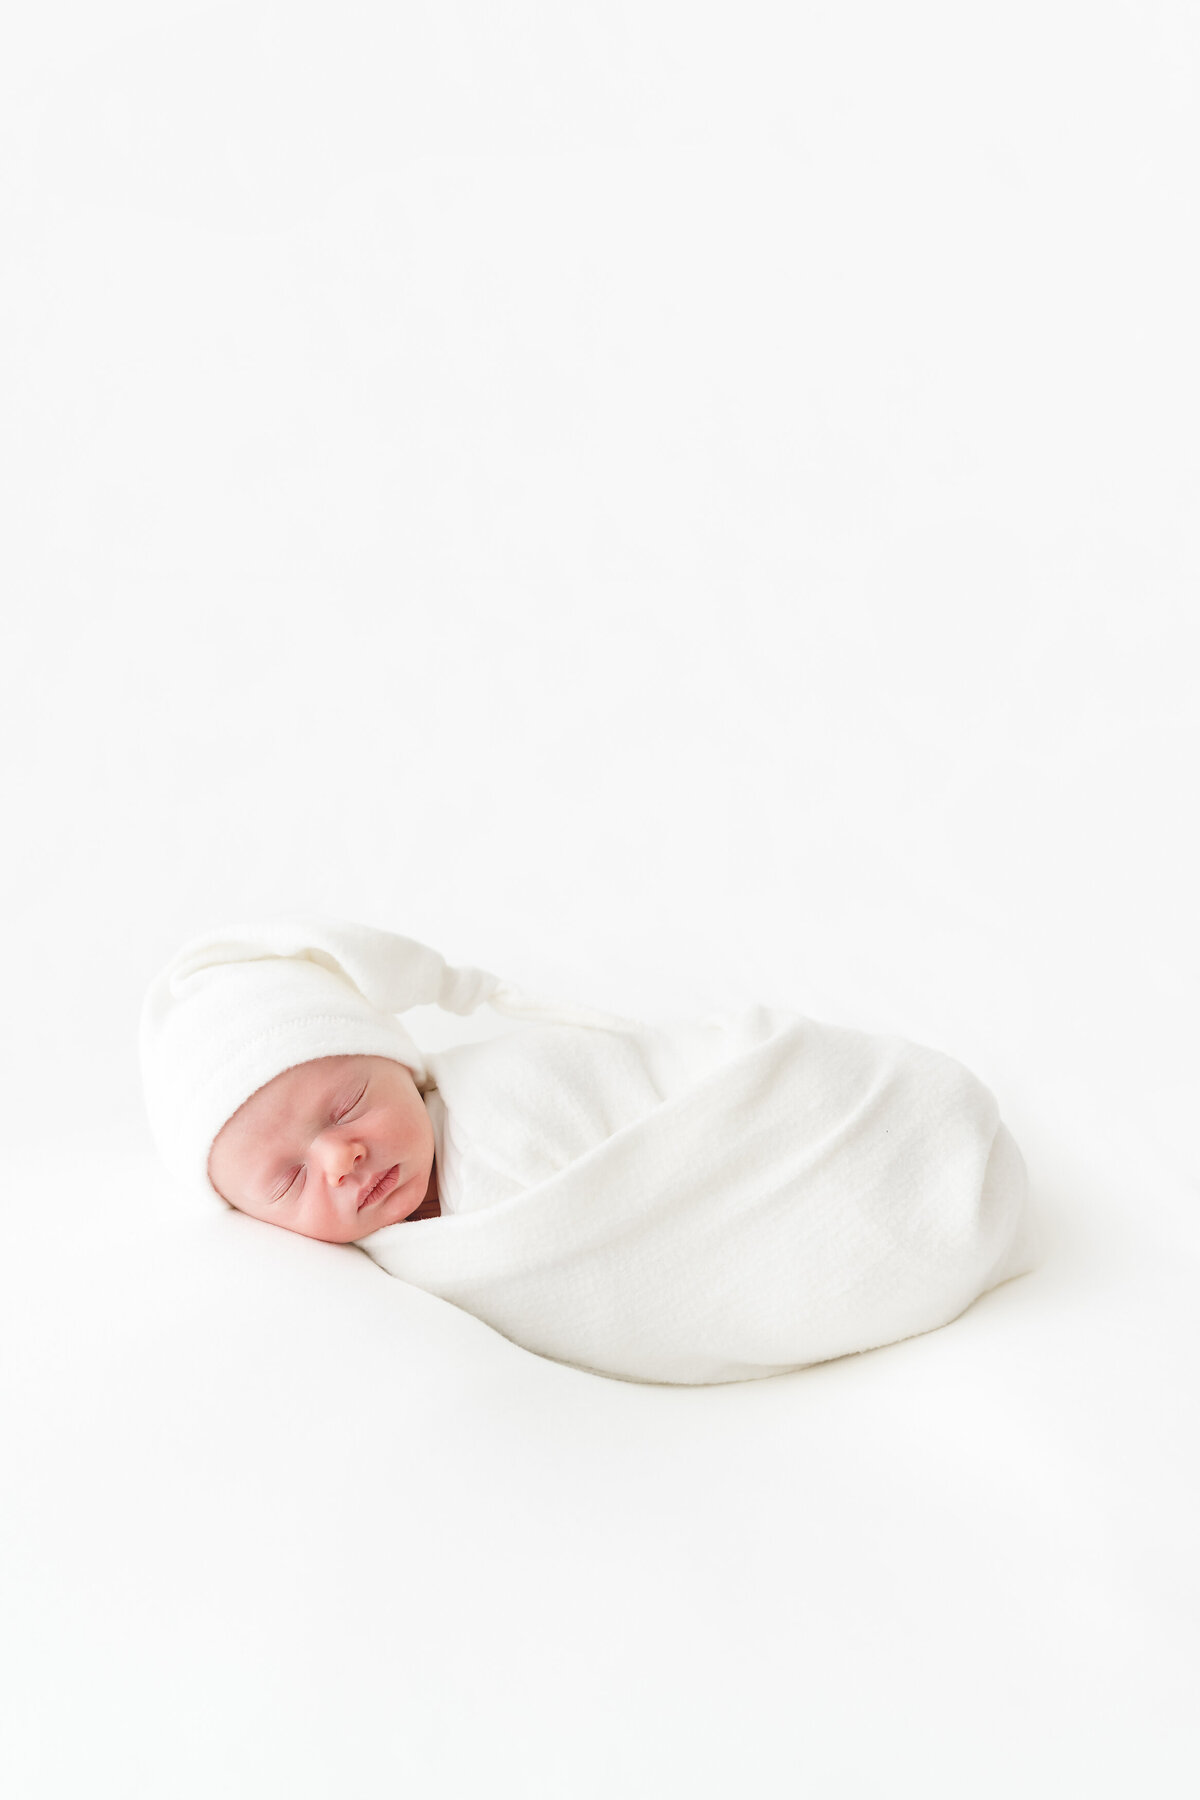 Chandler newborn photographer | Reaj Roberts Photography00049